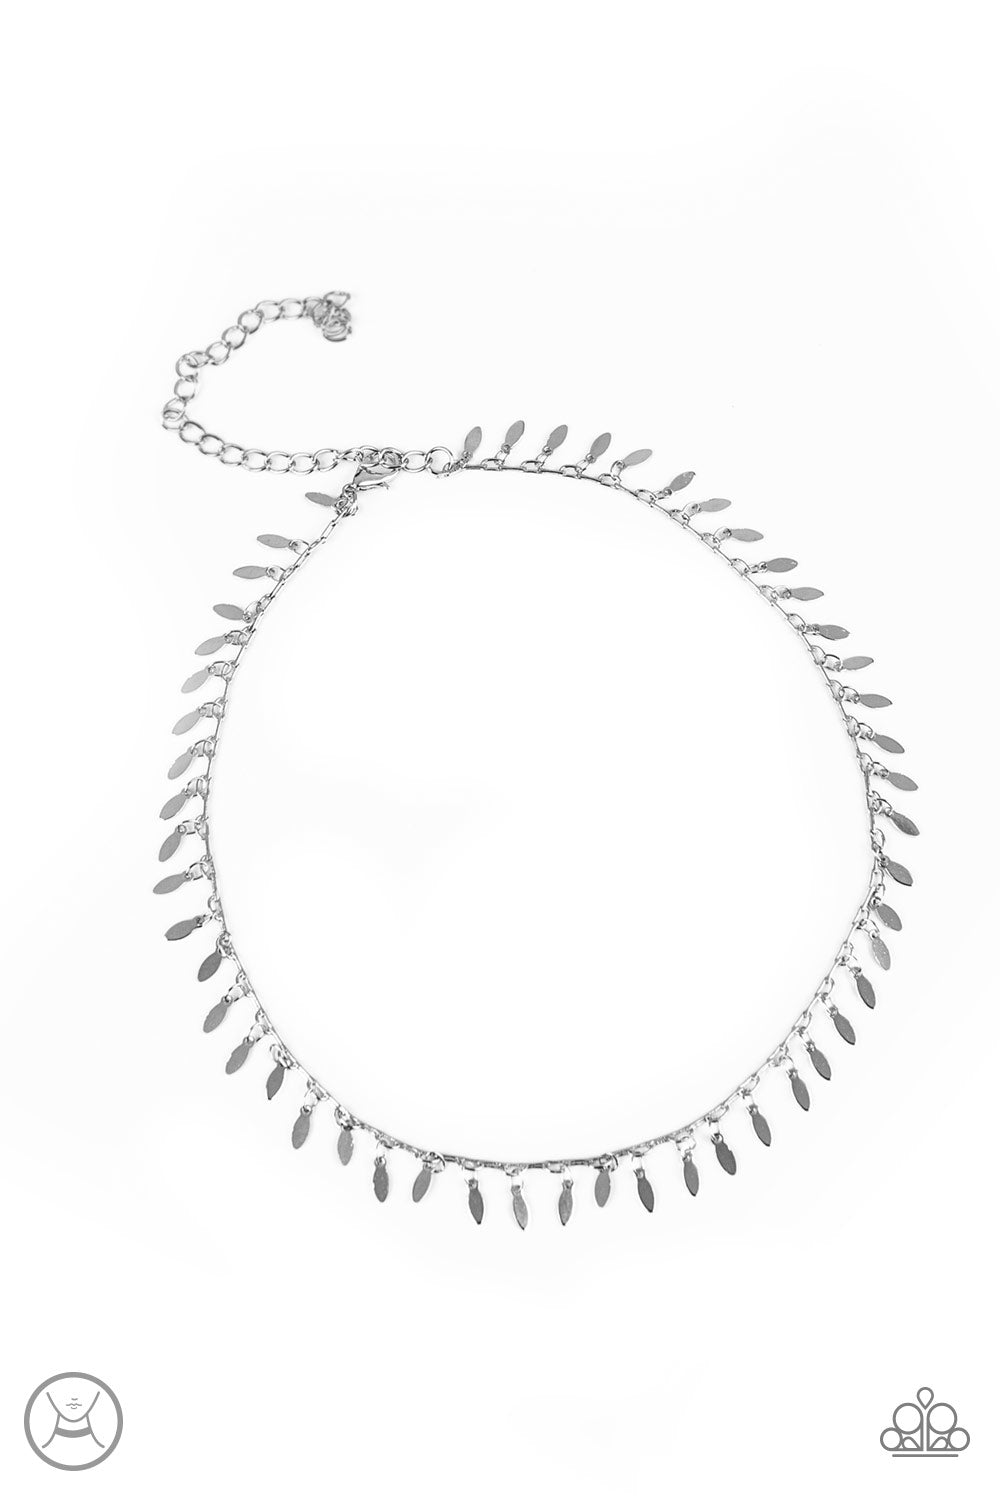 PURR-fect Ten - Silver necklace